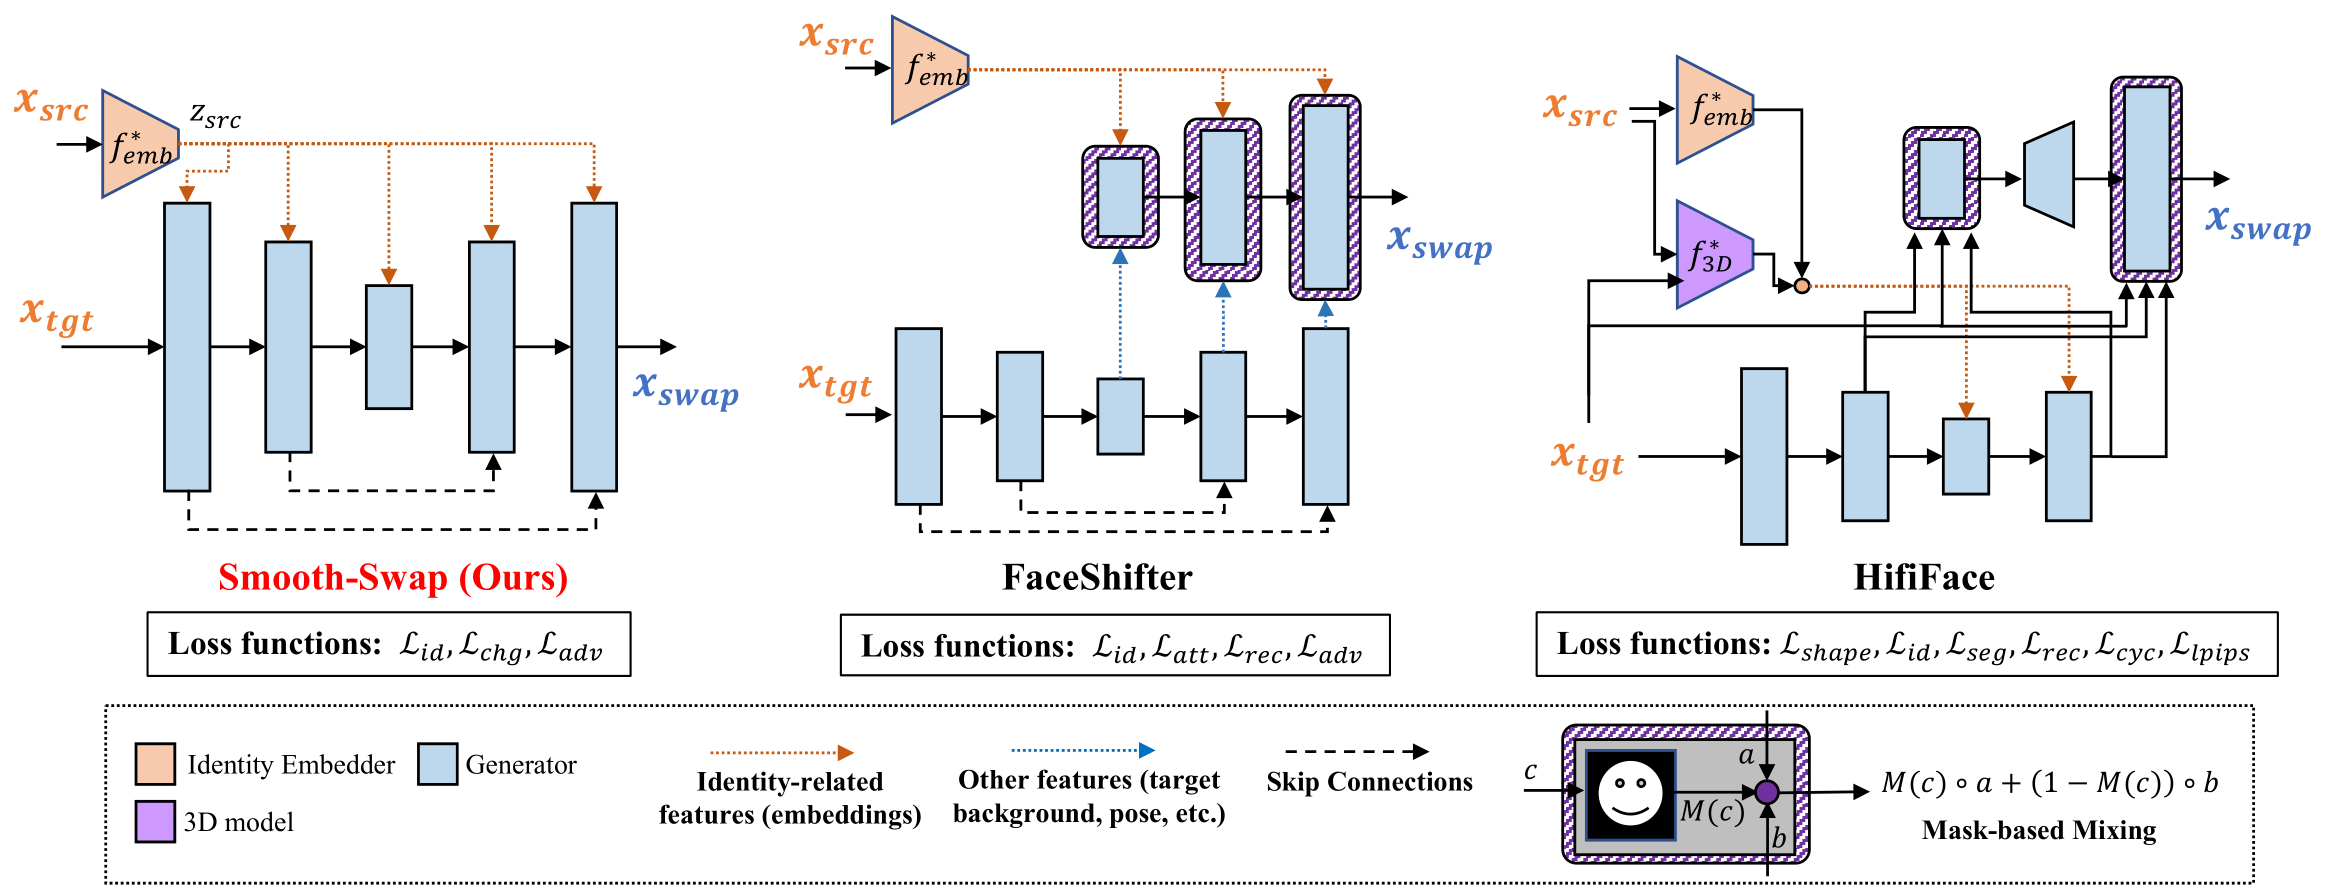 Component model visualisation